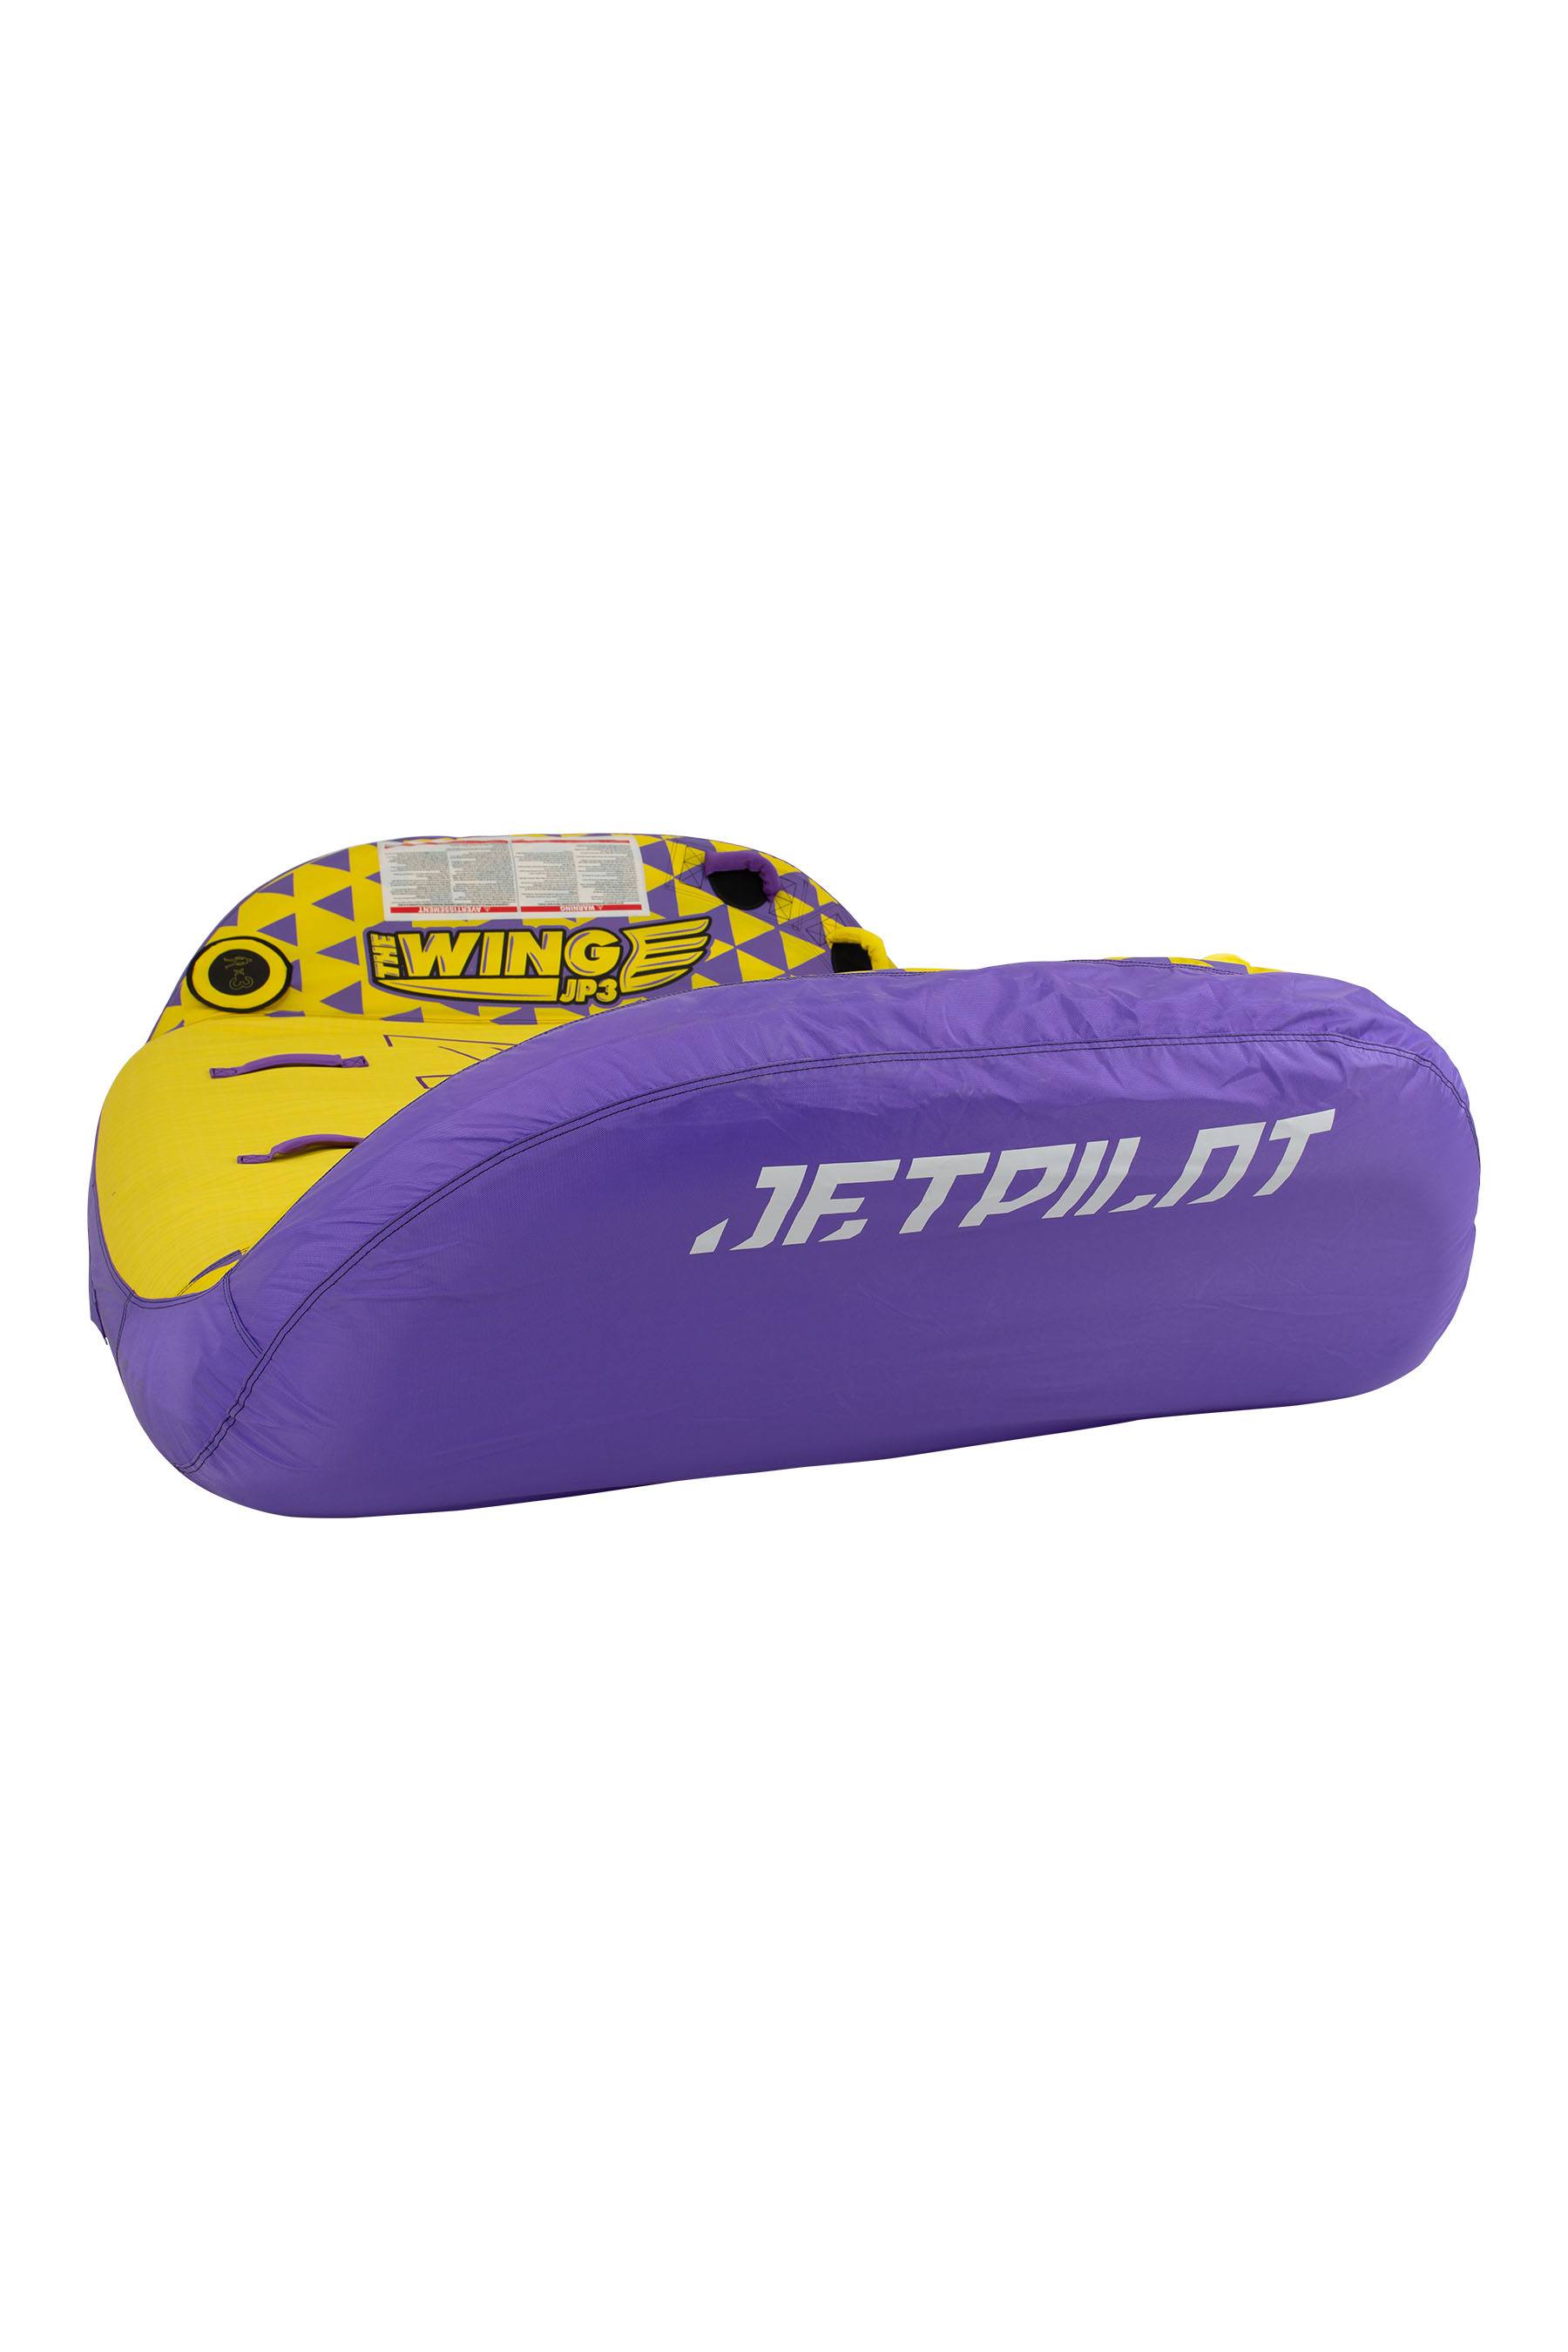 Jetpilot JP3 Wing Towable - Yellow/Purple 5